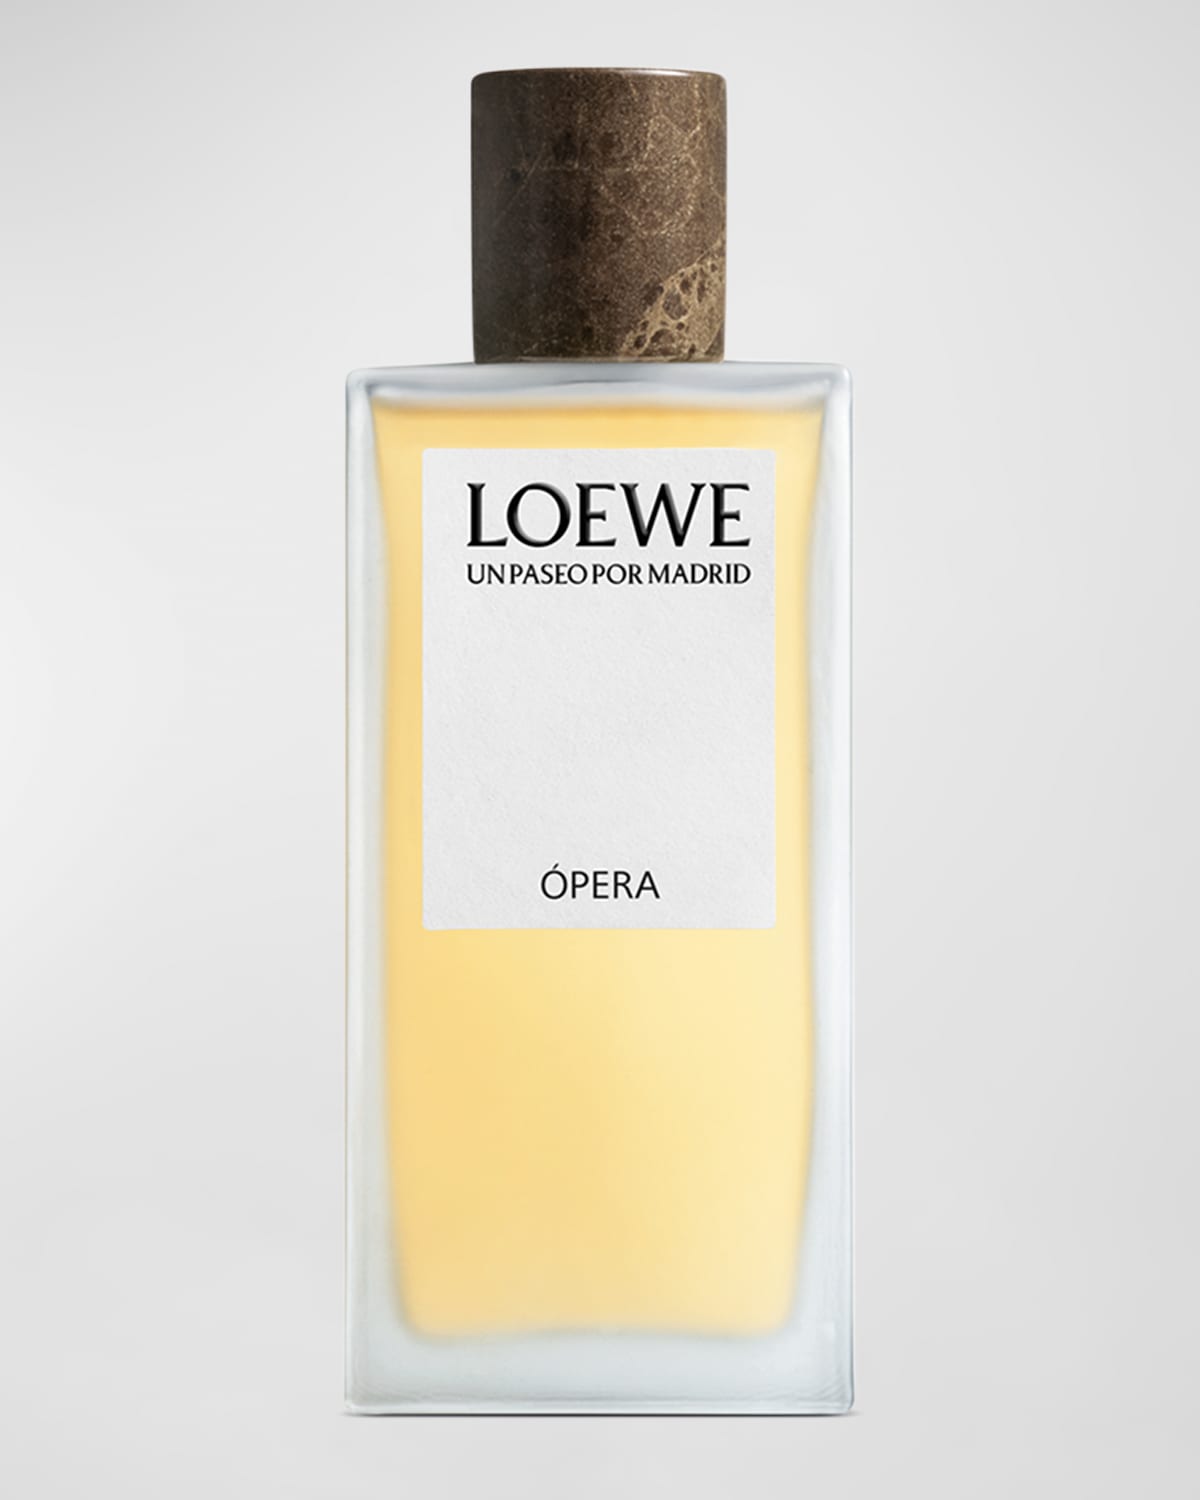 Shop Loewe Un Paseo Por Madrid Opera Eau De Parfum, 3.4 Oz.